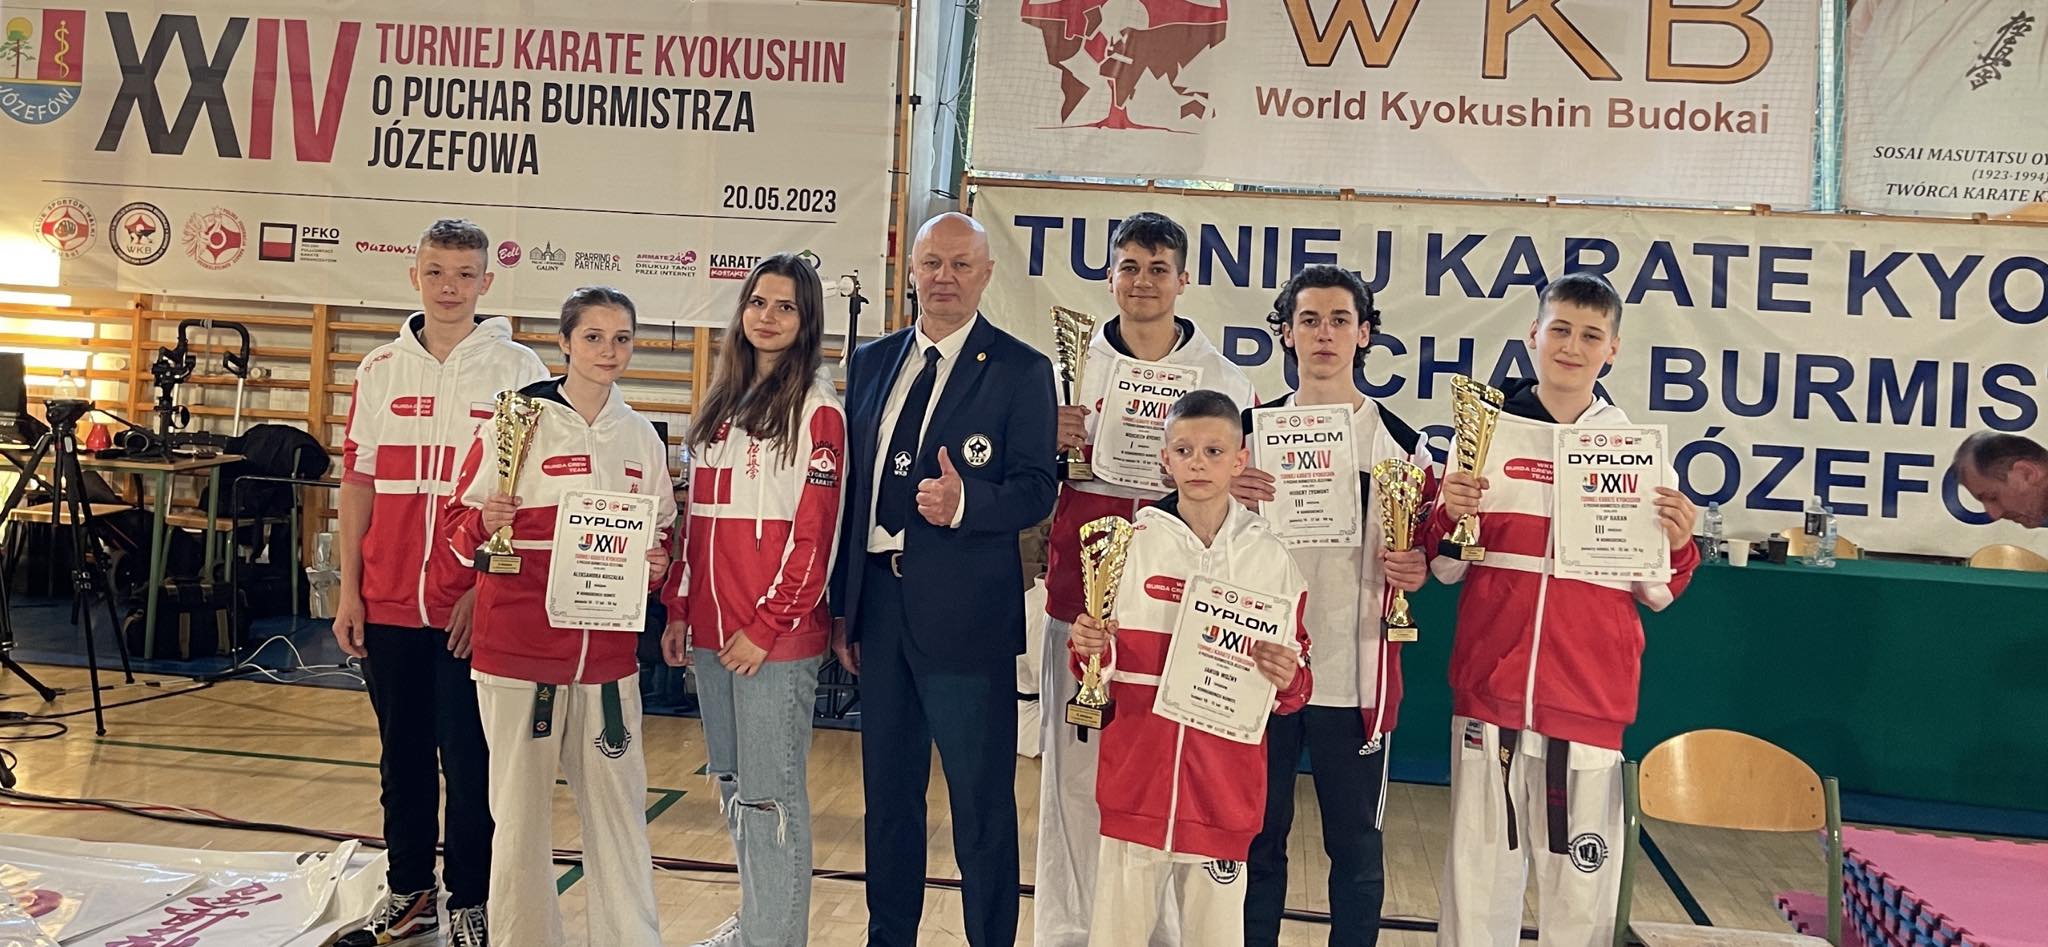 You are currently viewing 24. turniej Karate Kyokushin o puchar Burmistrza Józefowa